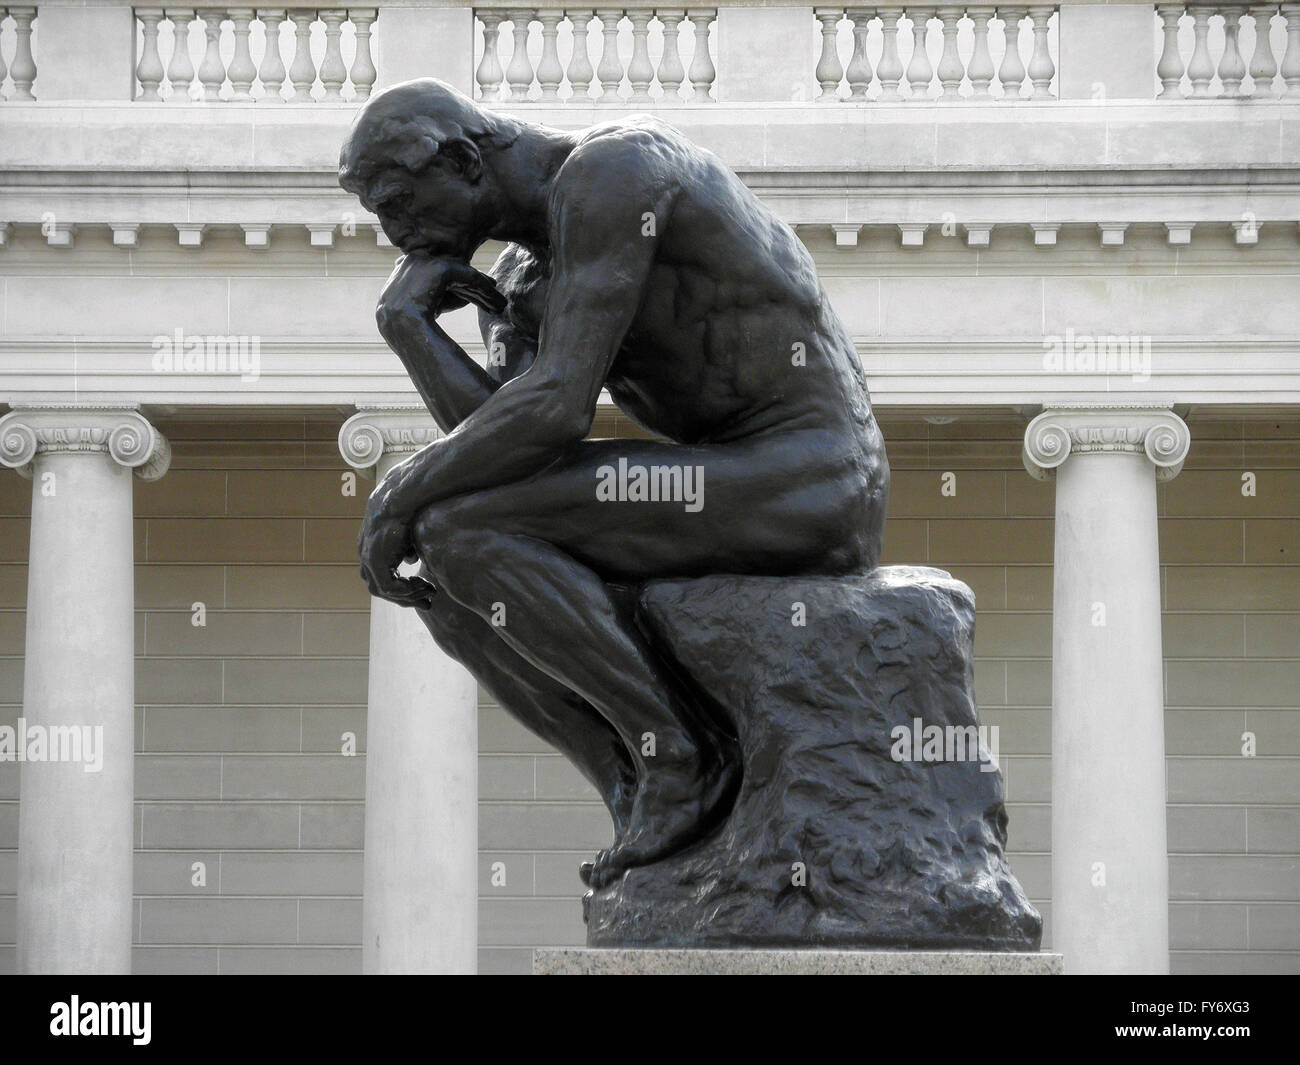 El perfil lateral de la obra maestra el Pensador de Rodin - El Pensador a la entrada del Palacio de la Legión de Honor en San F Foto de stock